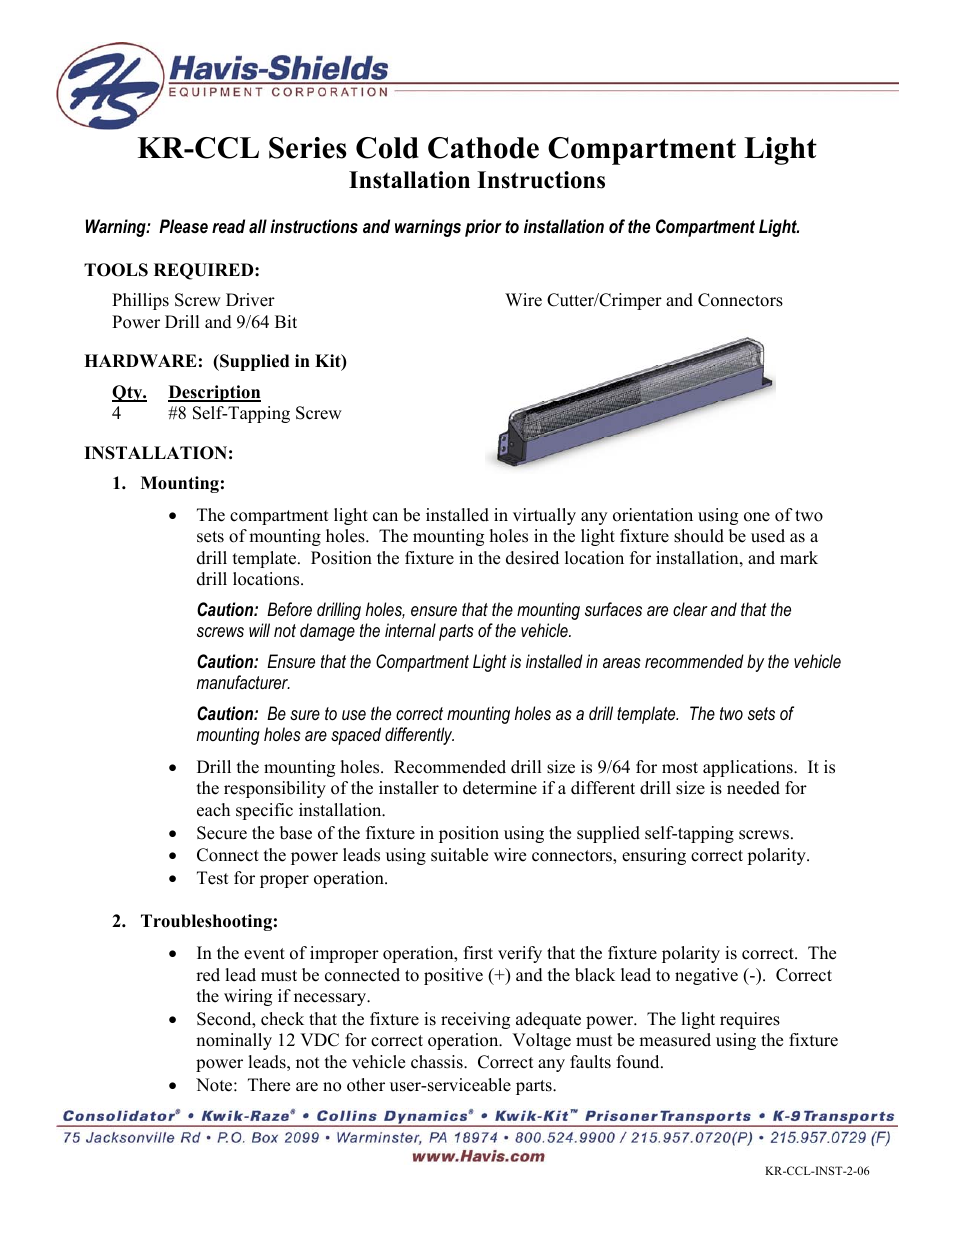 Cold Cathode Compartment Light KR-CCL Series